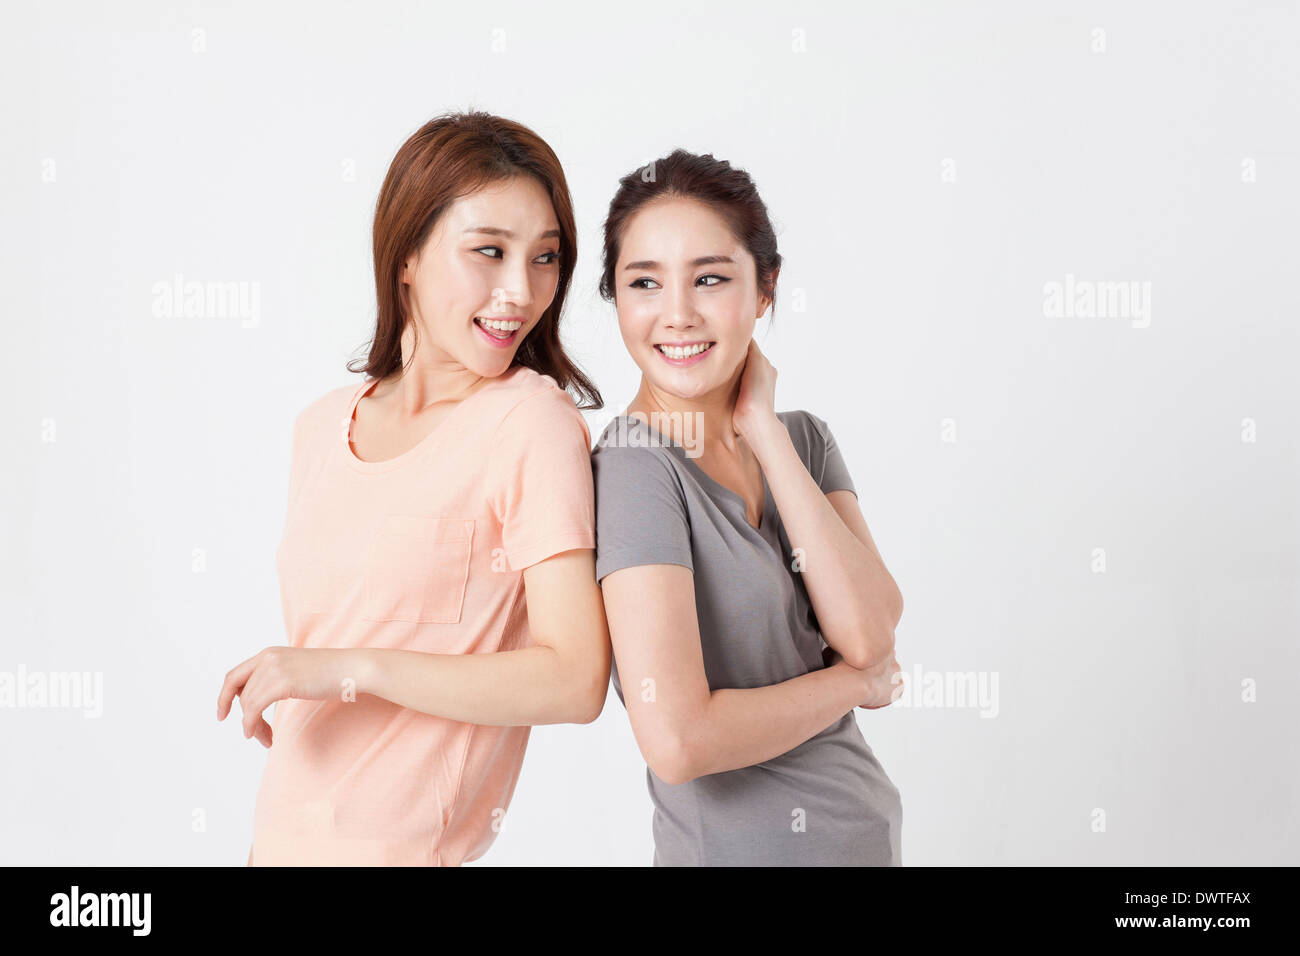 two women posing Stock Photo